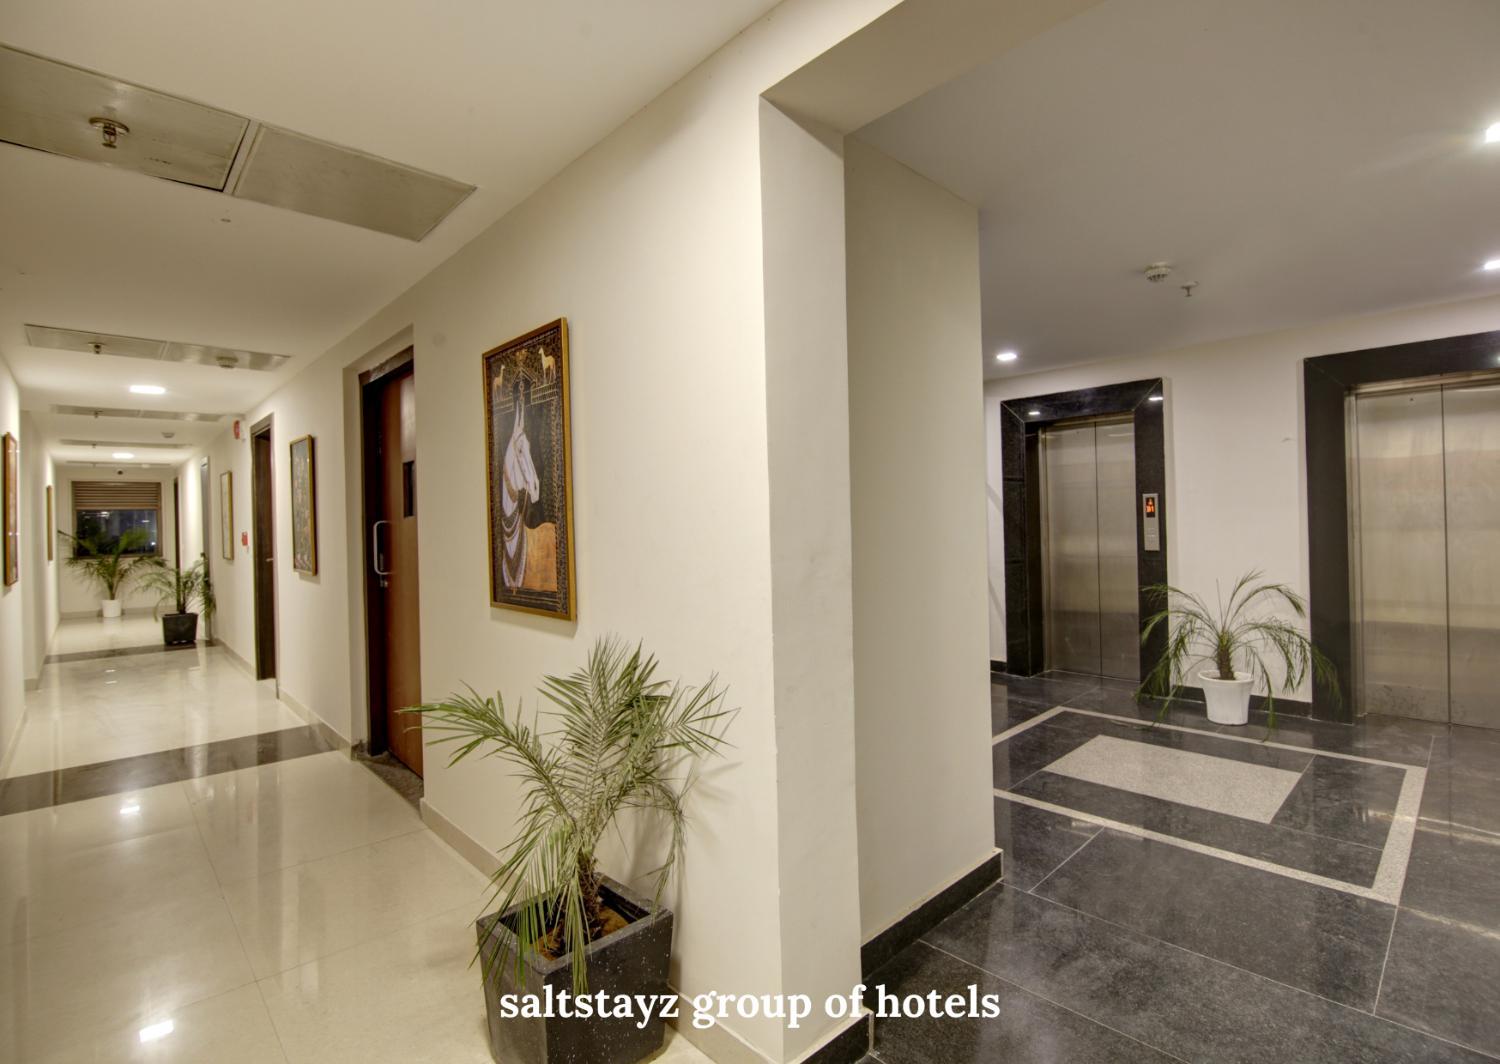 Saltstayz Luxe Executive Studio Apartment- Golf Course Extension Road, Gurgaon